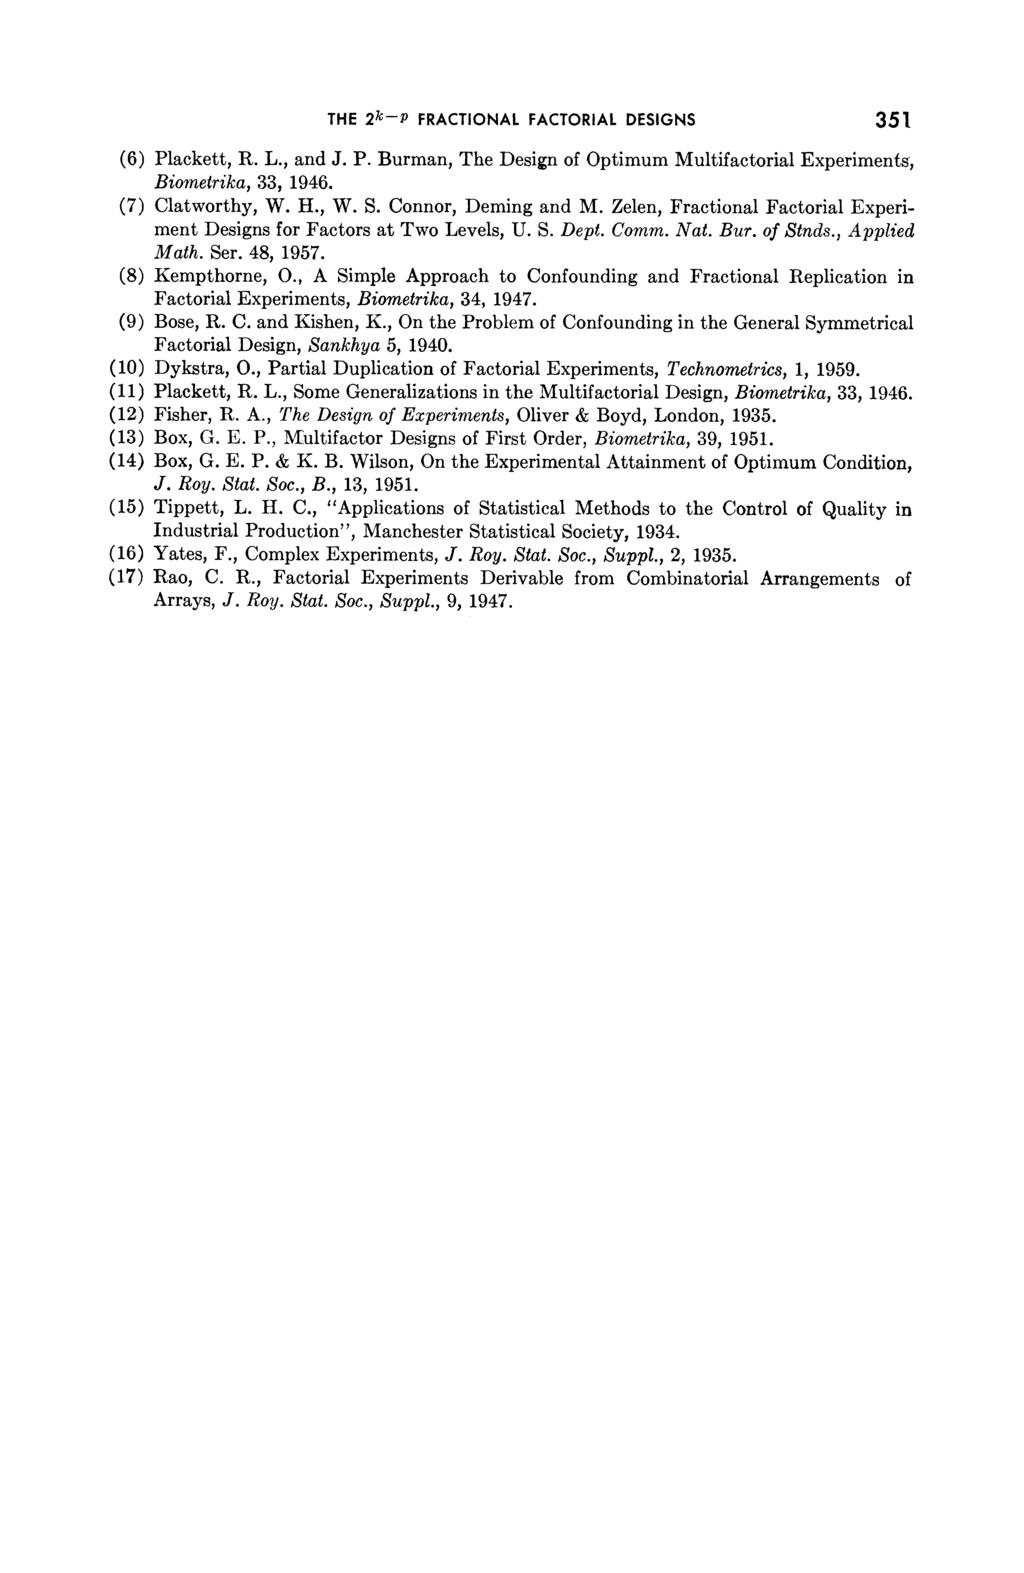 THE 2k-P FRACTIONAL FACTORIAL DESIGNS 351 (6) Plackett, R. L., and J. P. Burman, The Design of Optimum Multifactorial Experiments, Biometrika, 33, 1946. (7) Clatworthy, W. H., W. S.